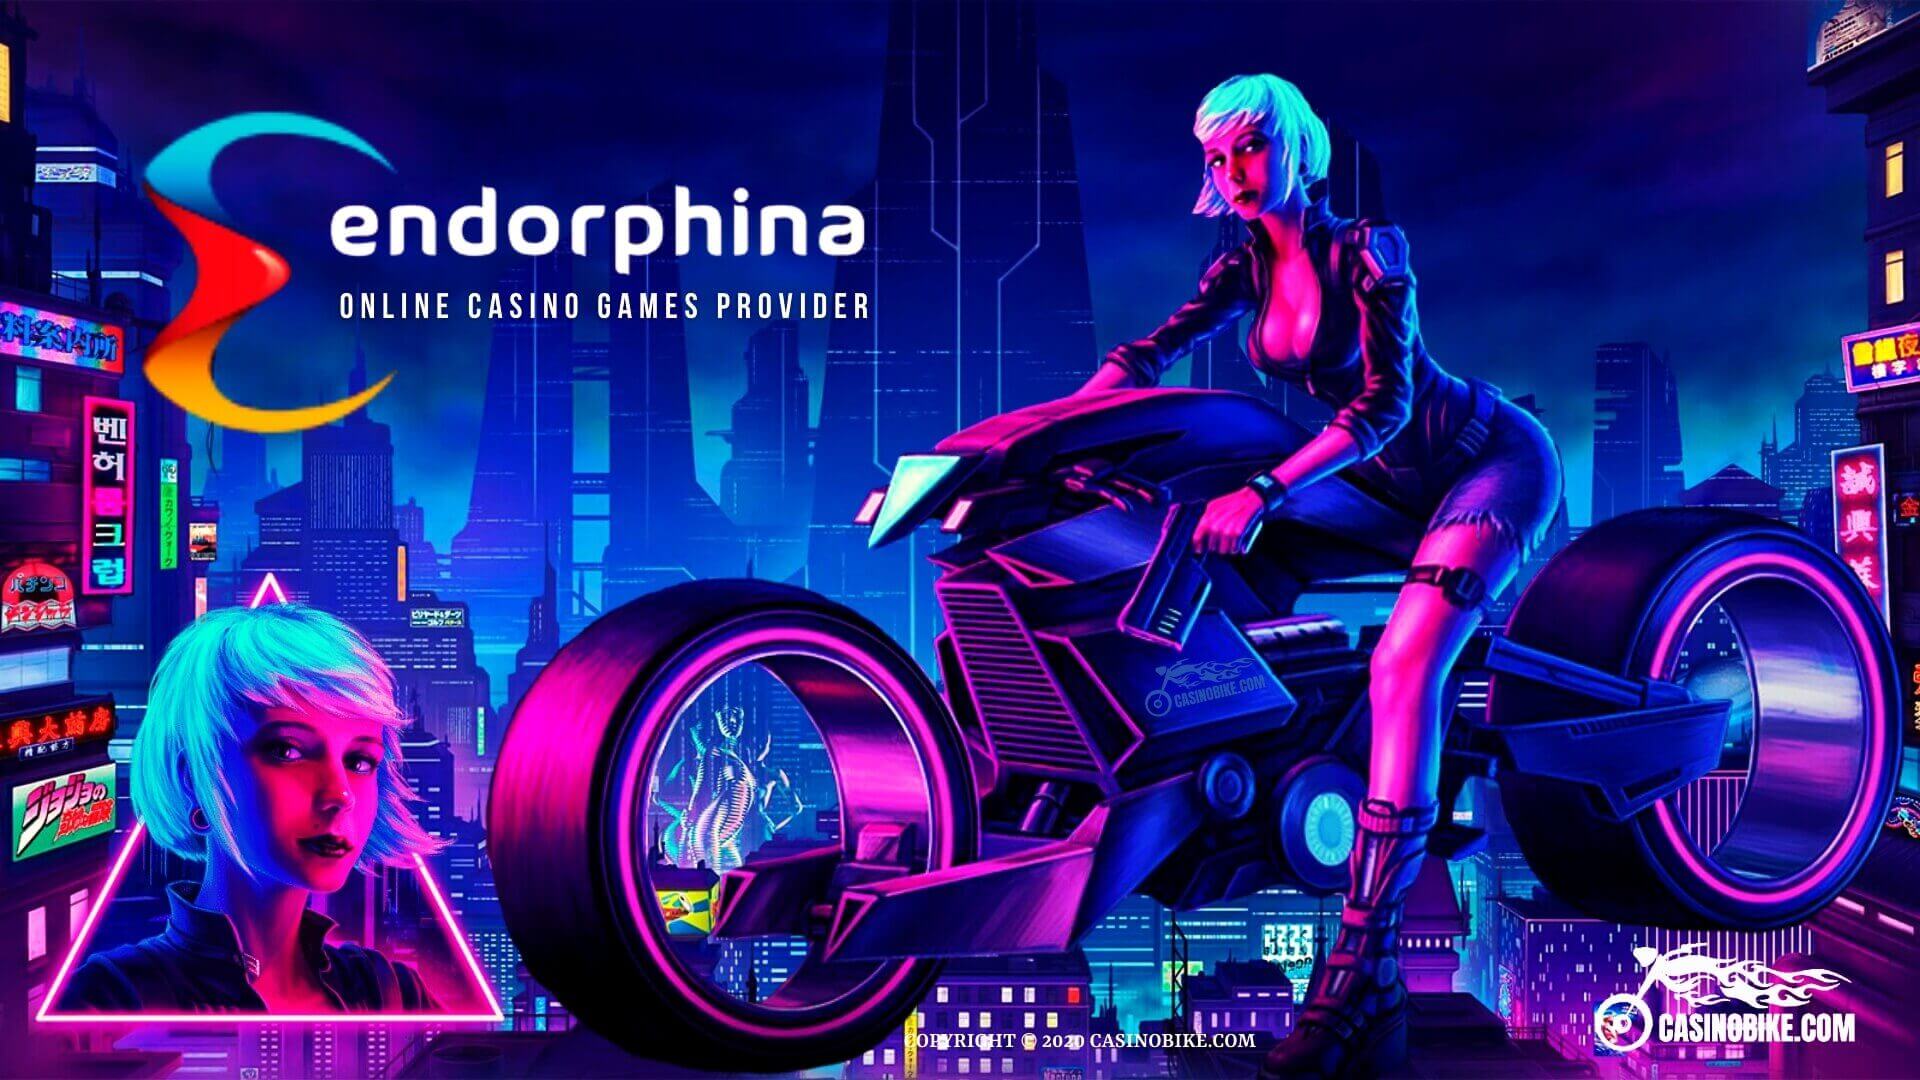 Endorphina Online Casino Games Provider